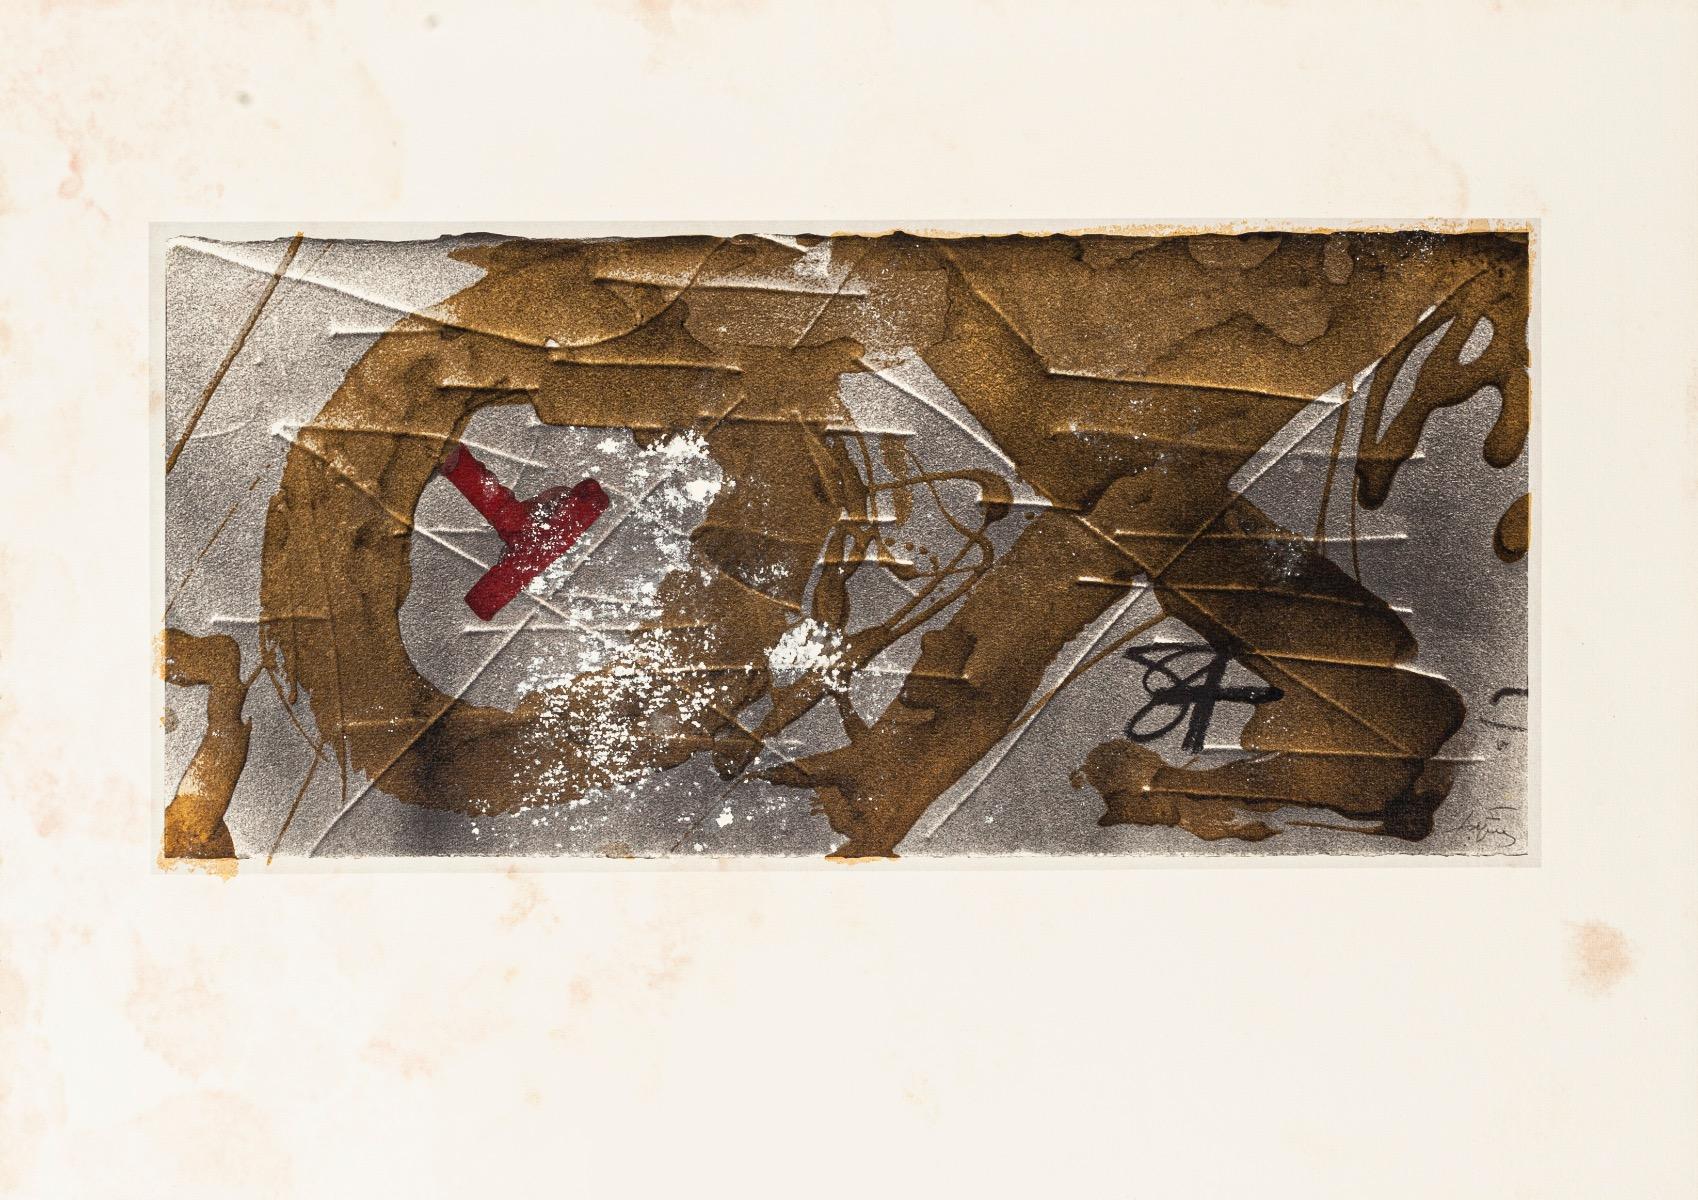 OEX - Vintage Offset Print After Antoni Tàpies - 1982 - Brown Abstract Print by Antoni Tàpies (after)